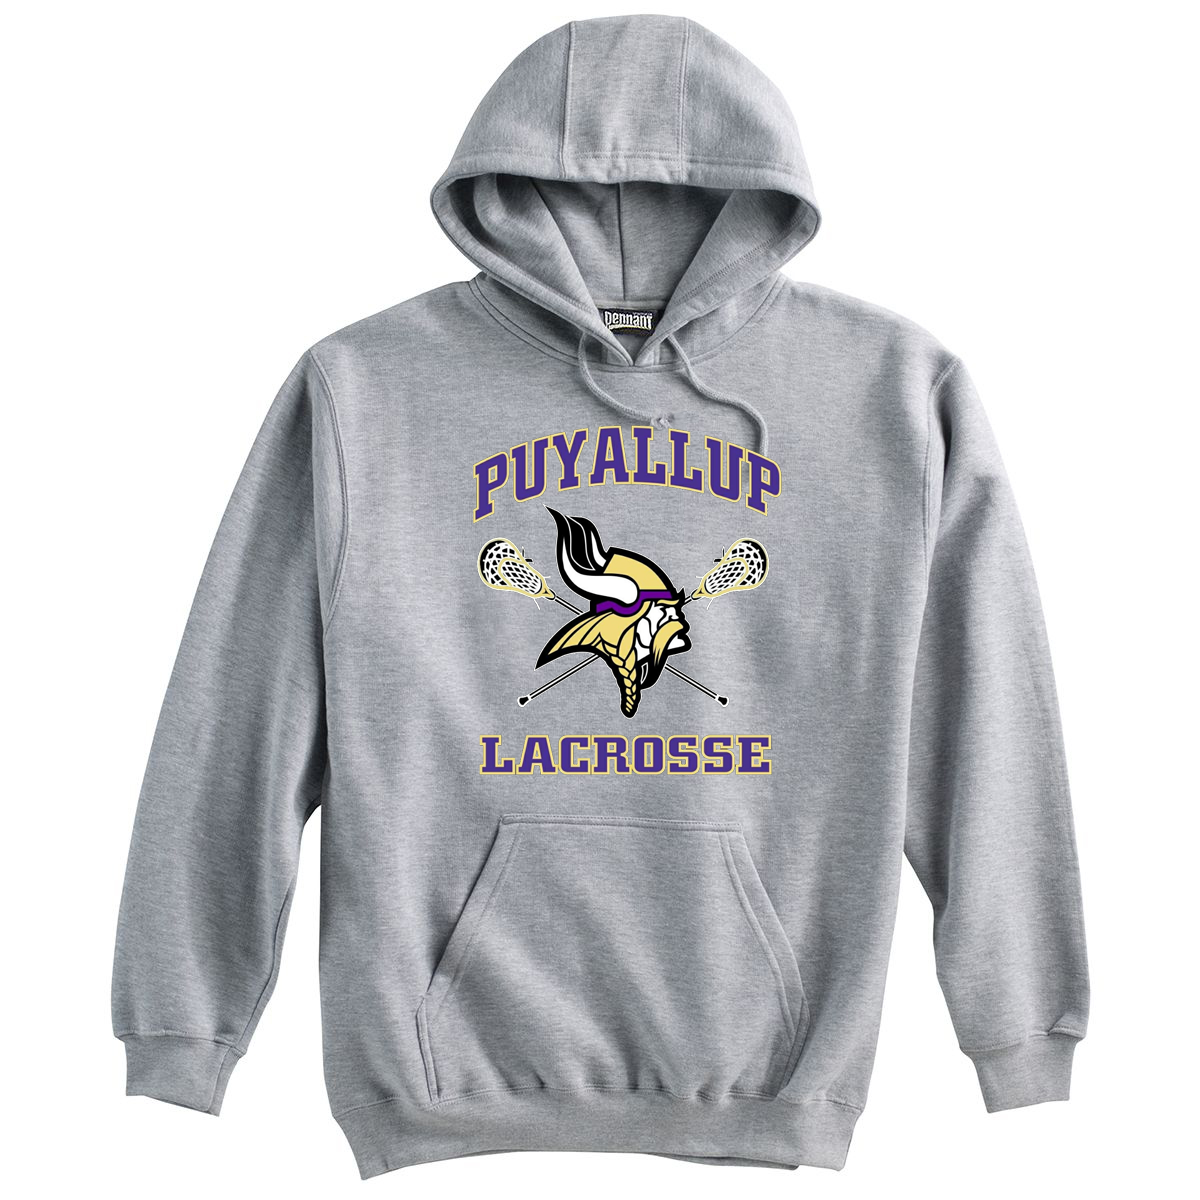 Puyallup Lacrosse Grey Sweatshirt